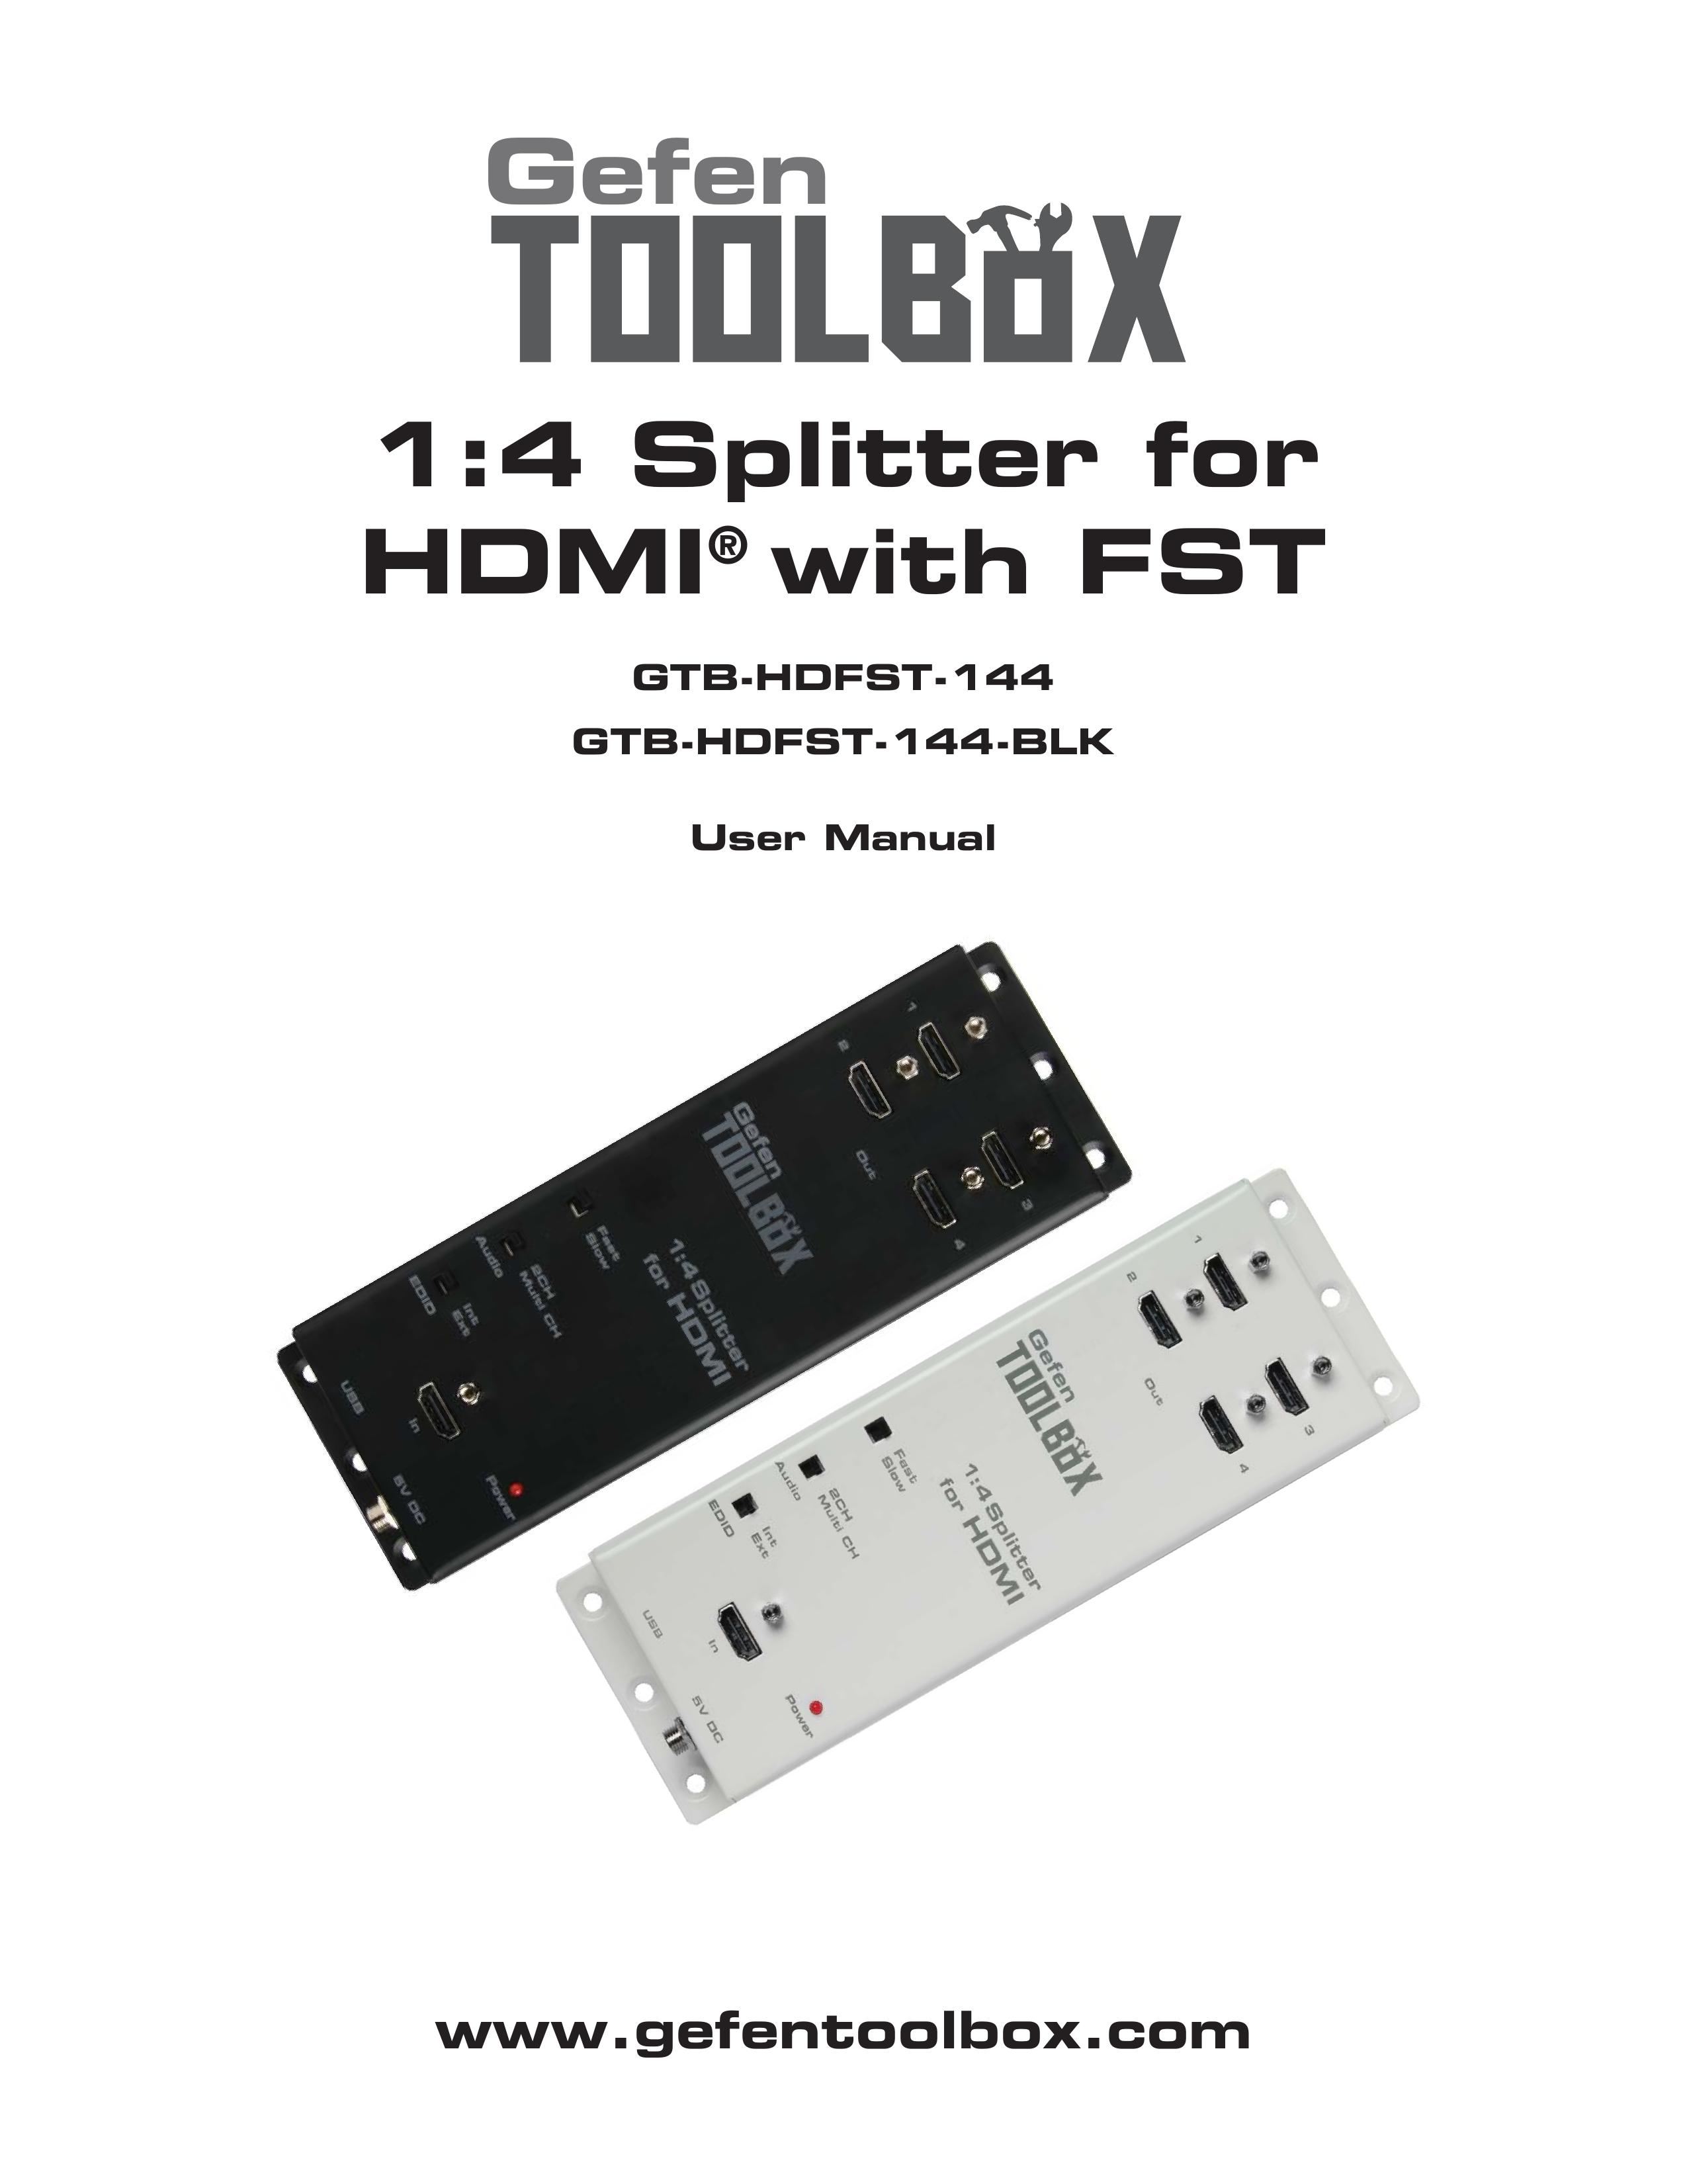 Gefen GTB-HDFST-144 Log Splitter User Manual